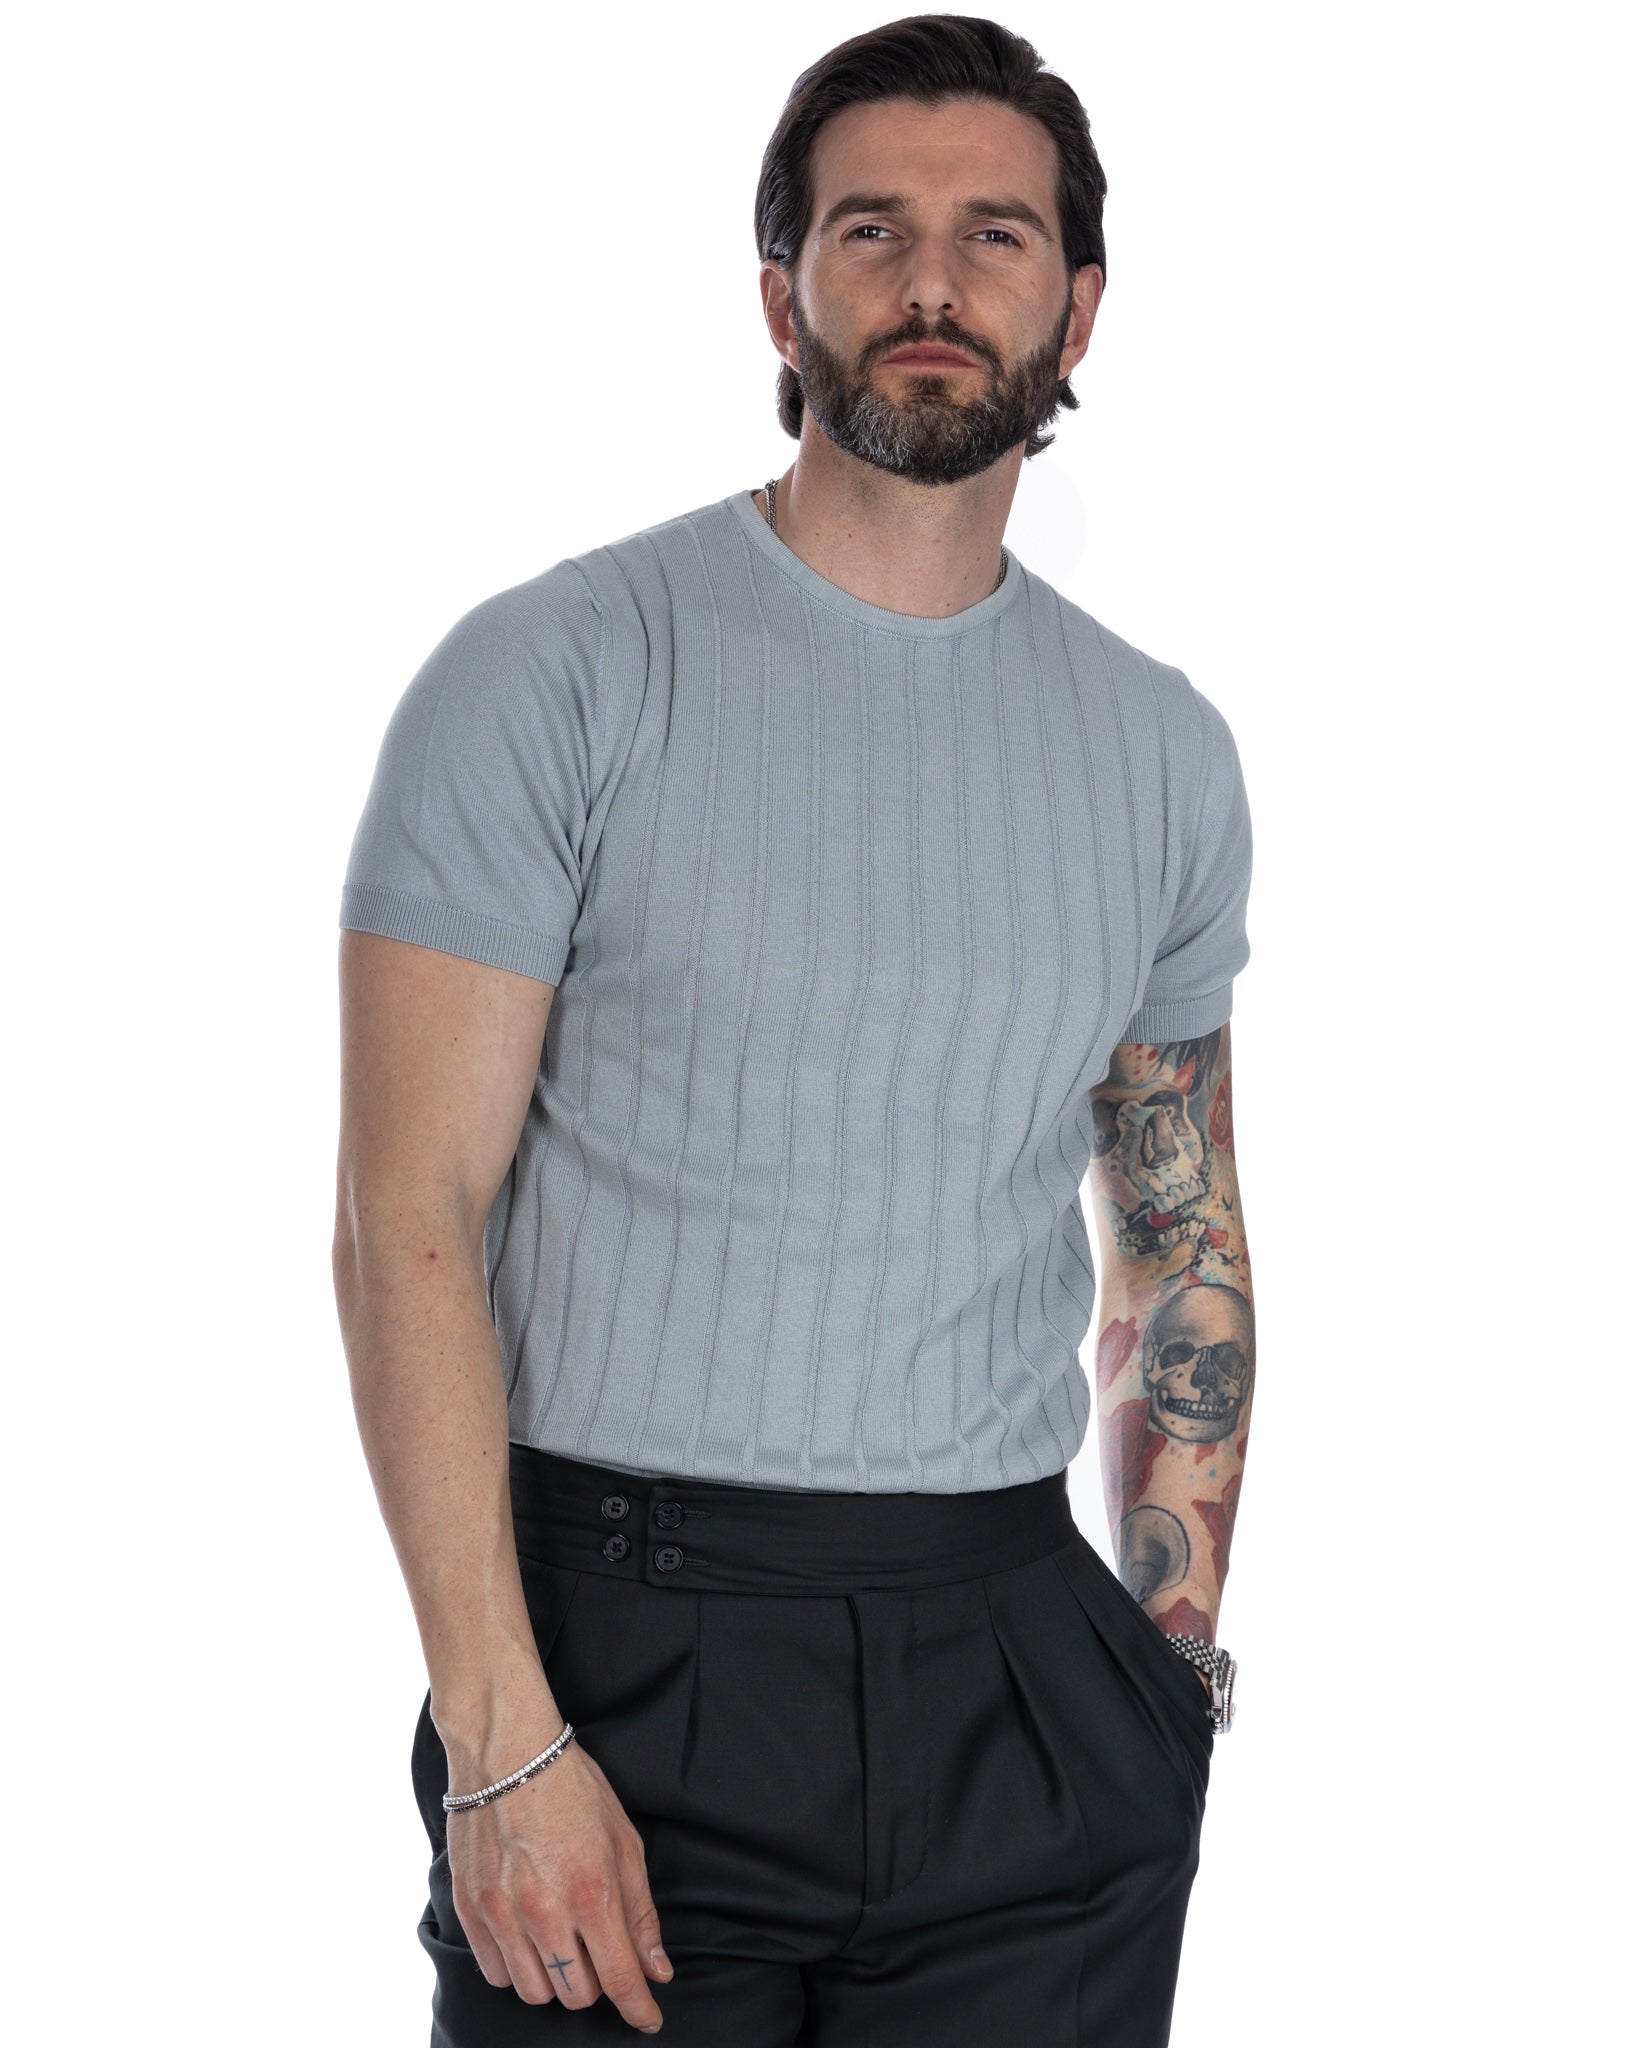 Andreas - light gray ribbed knitted t-shirt